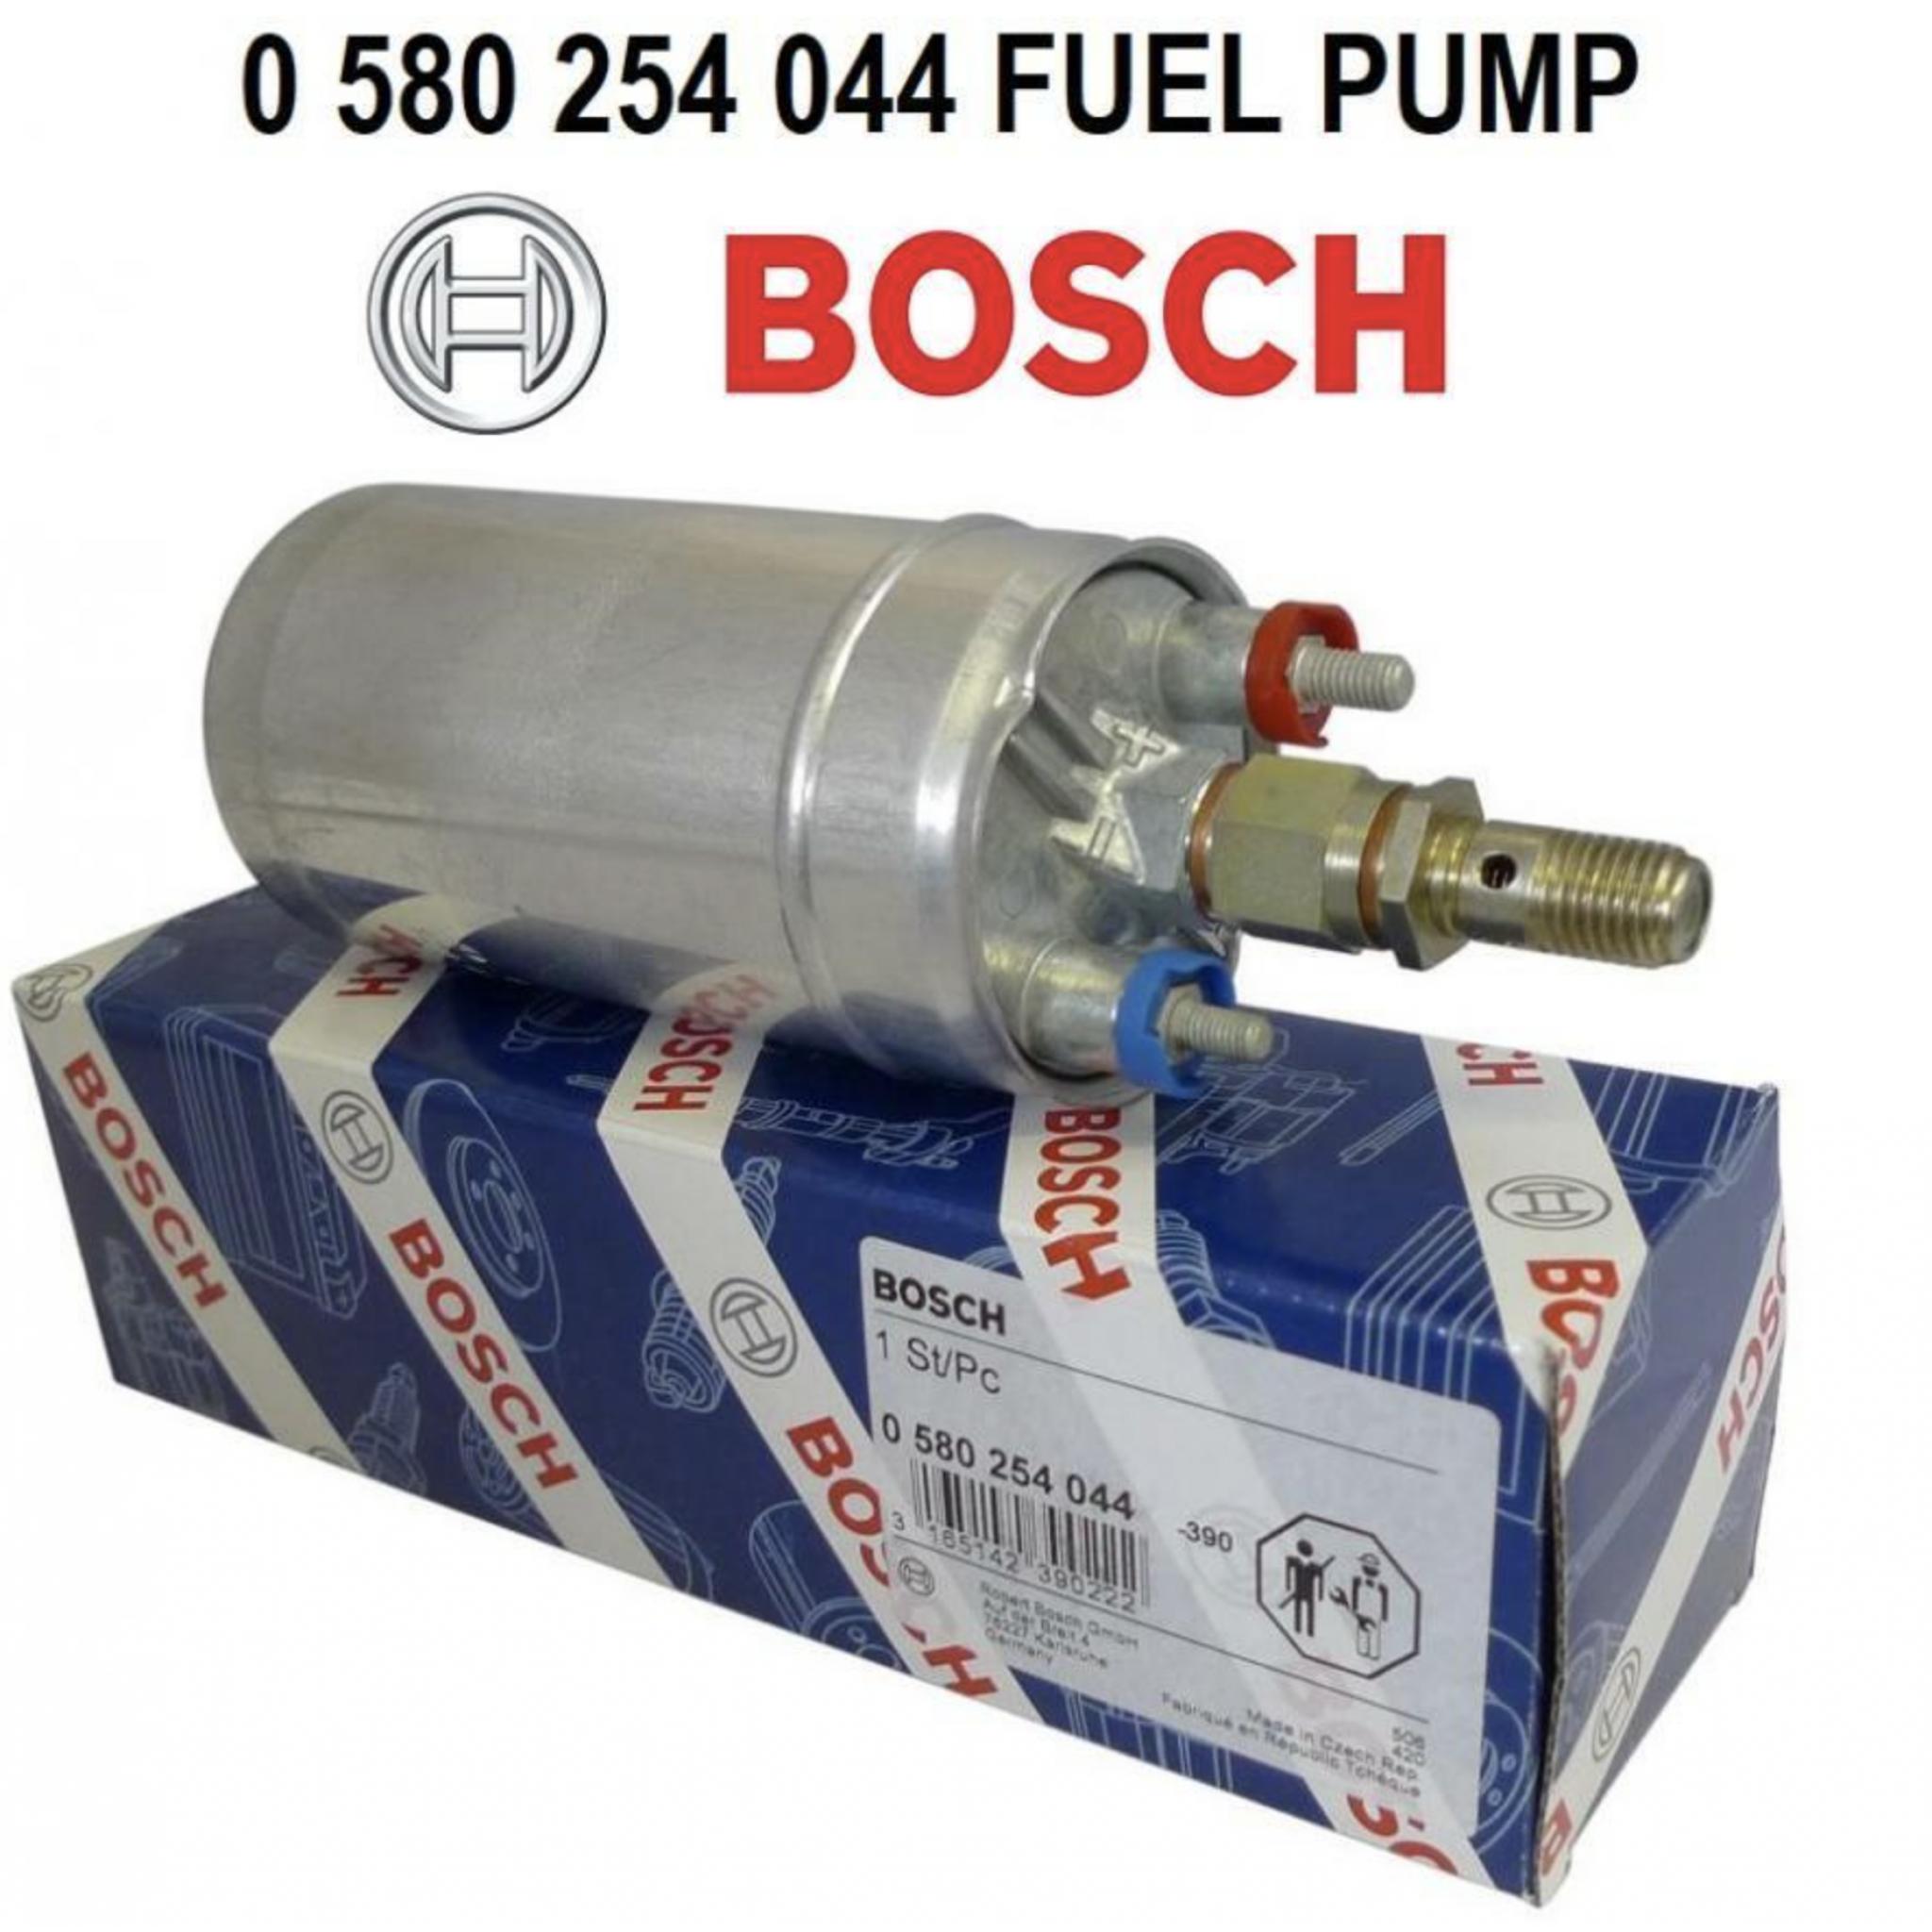 External fuel pump